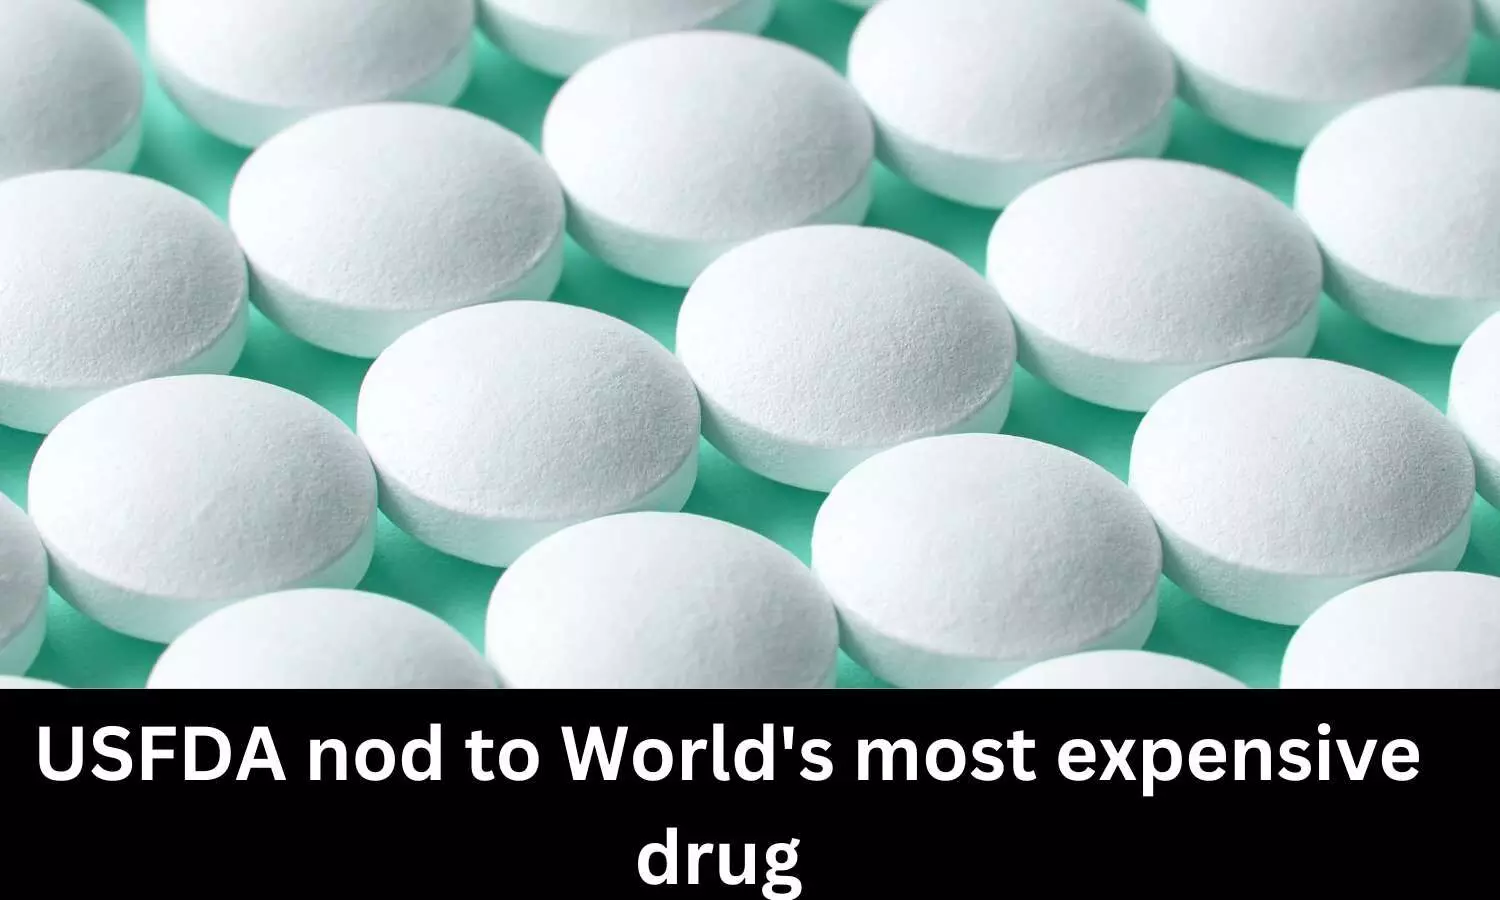 Worlds most expensive drug: USFDA nod to HEMGENIX worth USD 3.5 million a dose